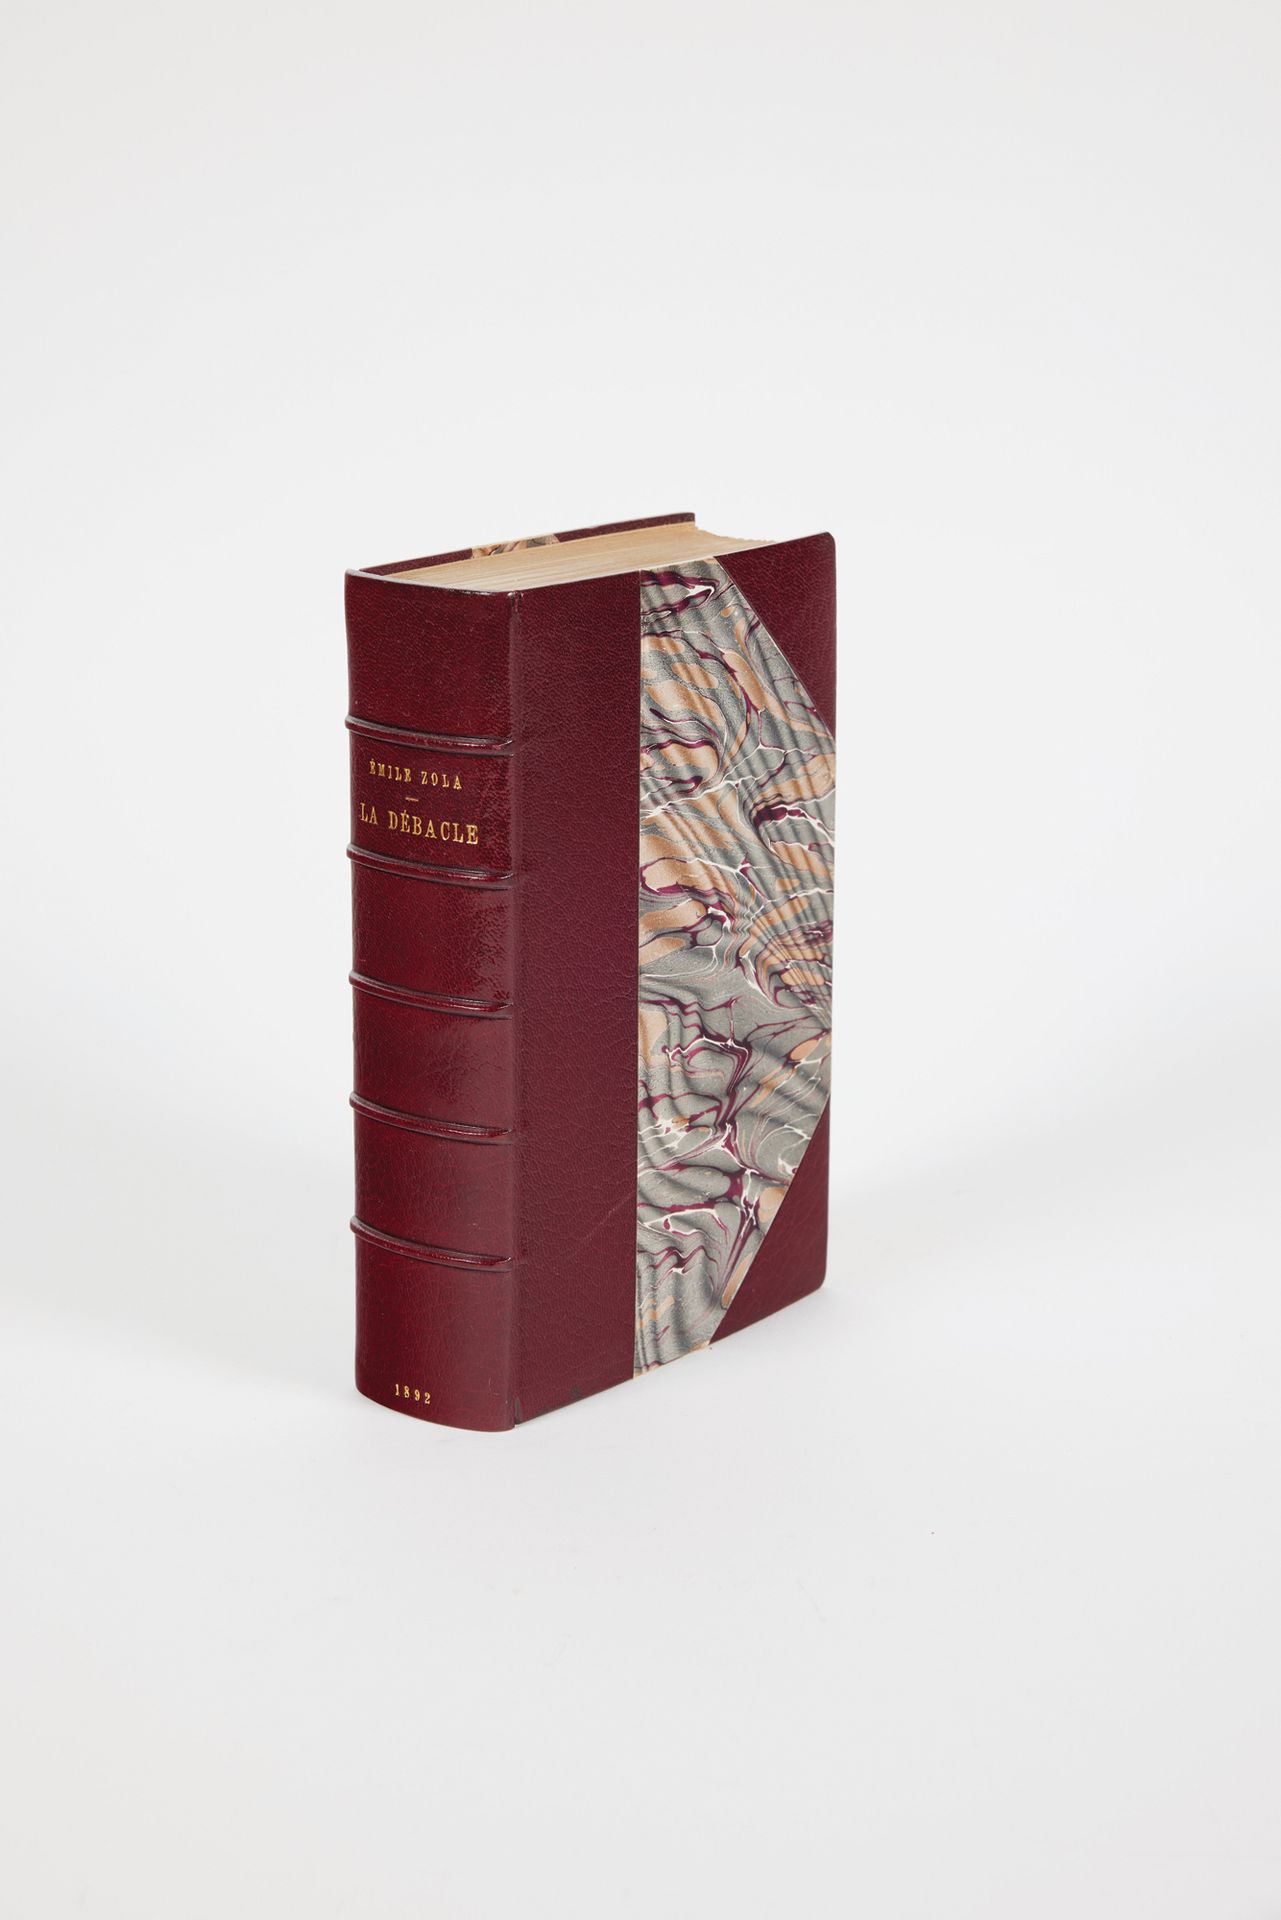 ZOLA, Emile. La Débacle.巴黎，Bibliothèque-Charpentier出版社，1892年；大8开本，半酒红色摩洛哥语，带角。

&hellip;